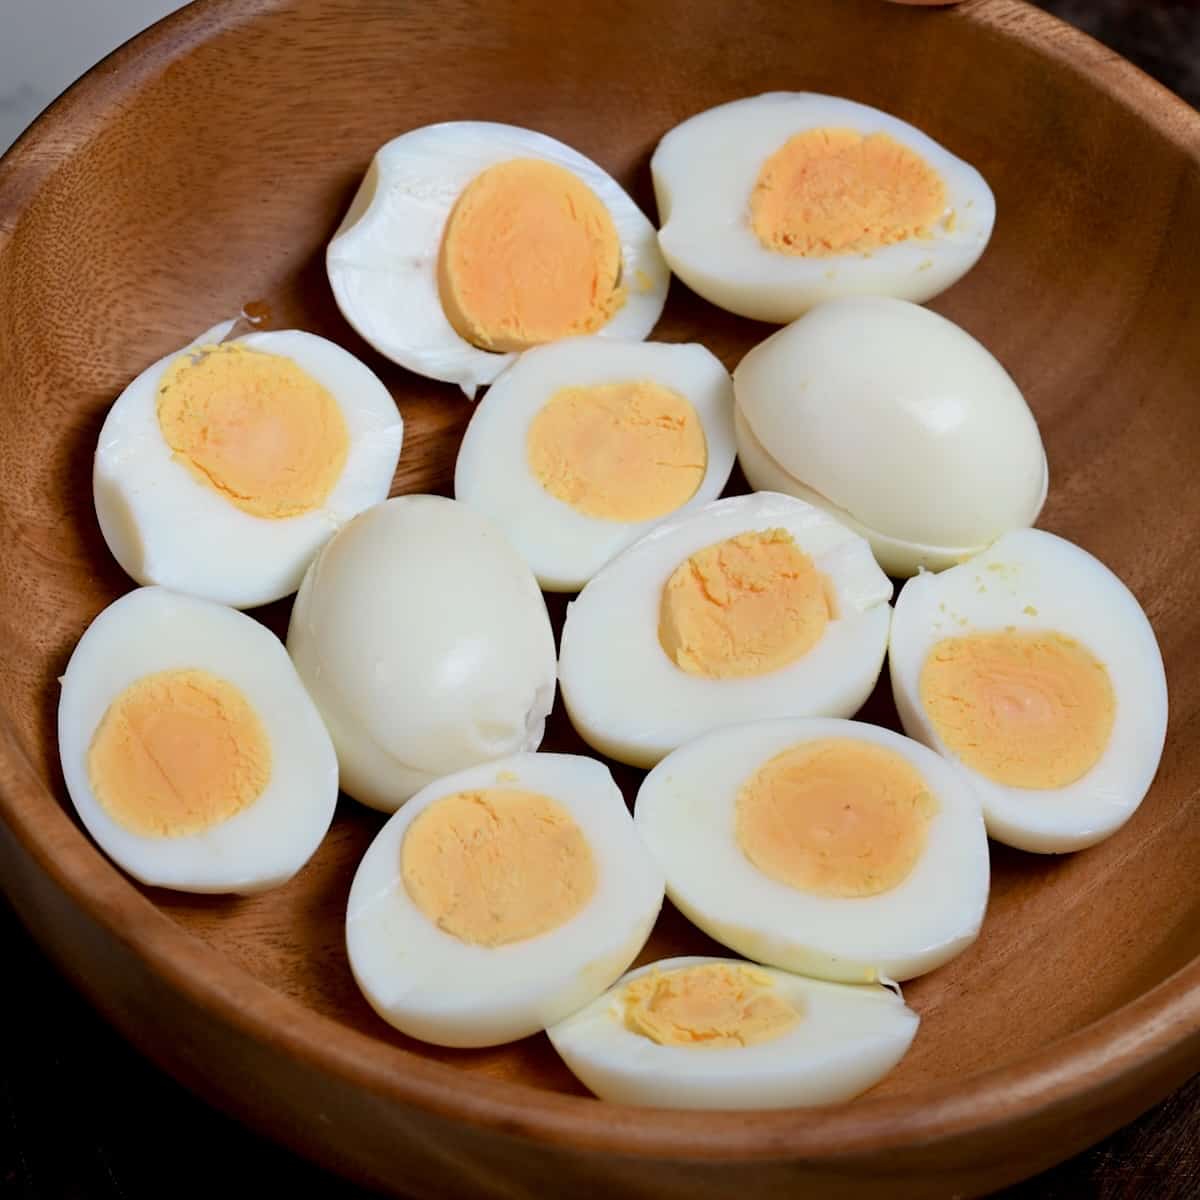 Air Fryer Boiled Eggs Recipe